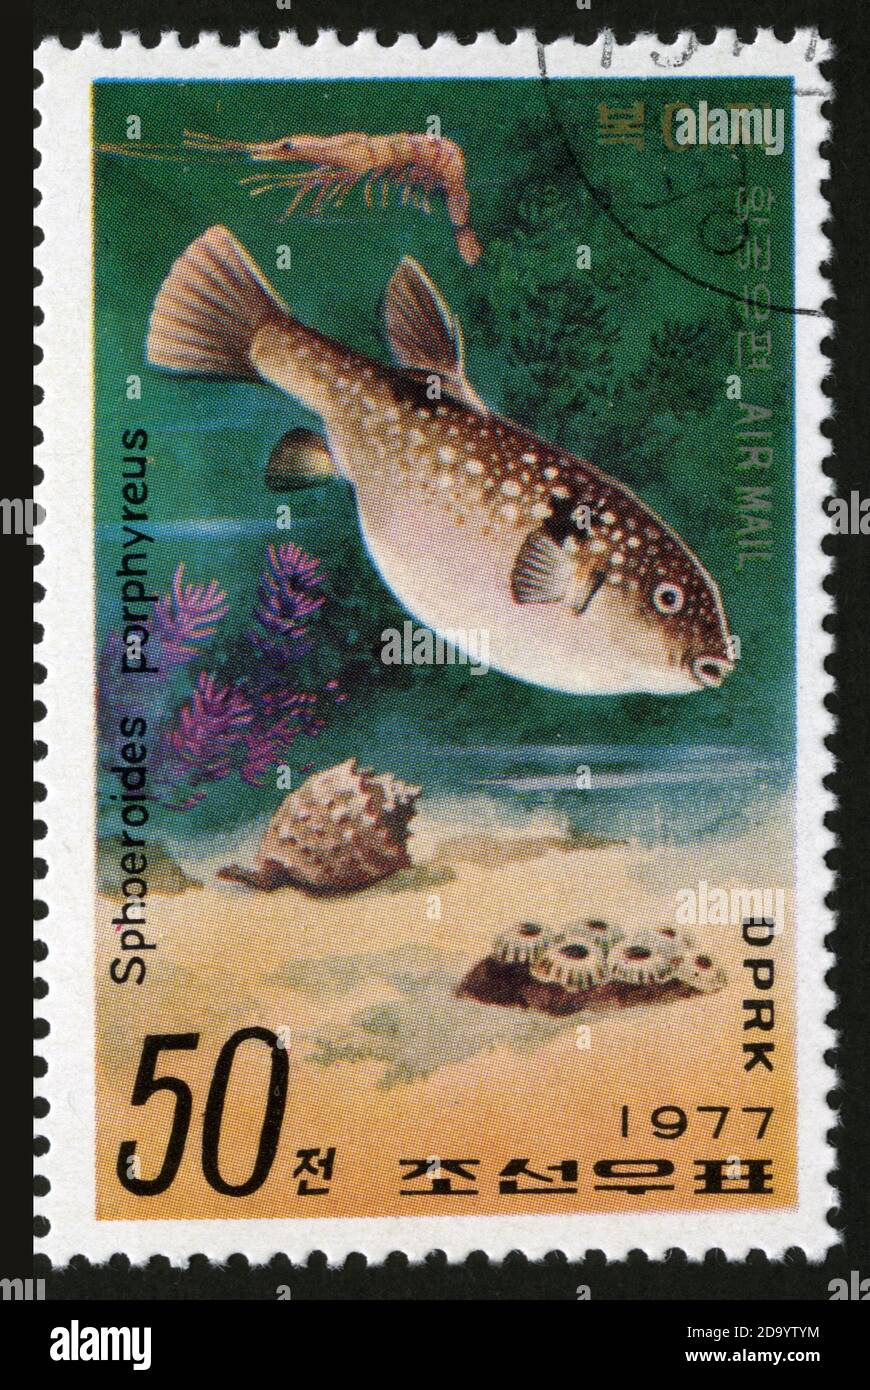 Stamp print in Korea,1977, animals,shells, molluscs,Sphoeroides porphyreus Stock Photo